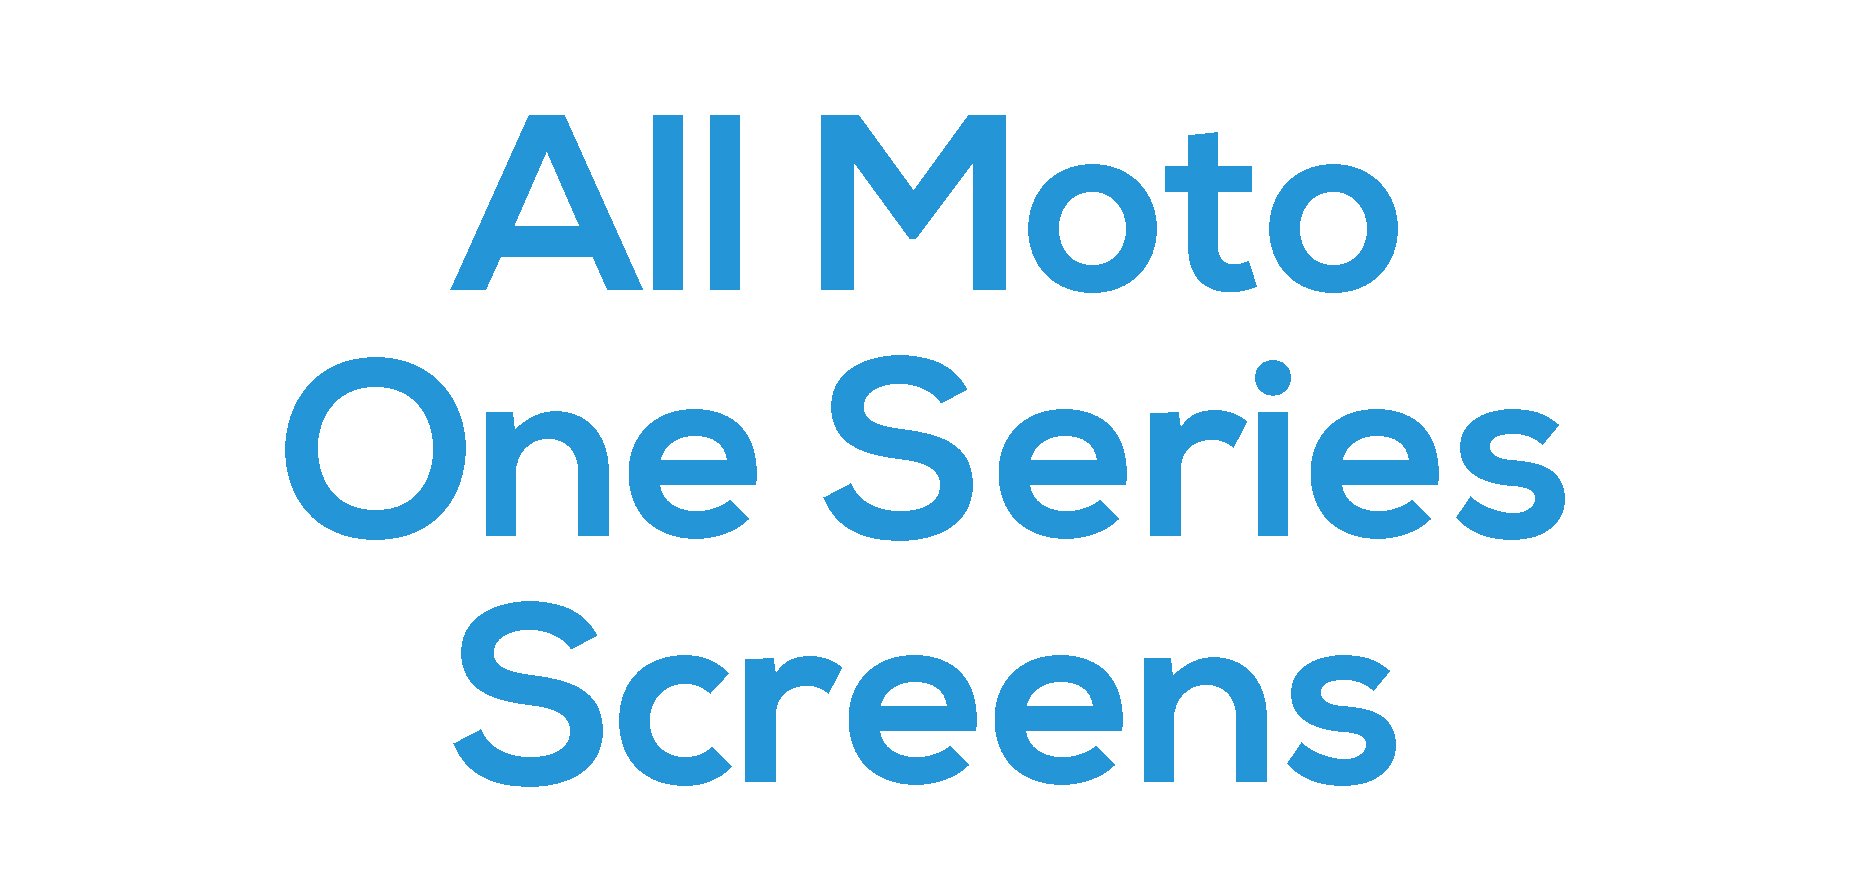 All Moto One Series Screens